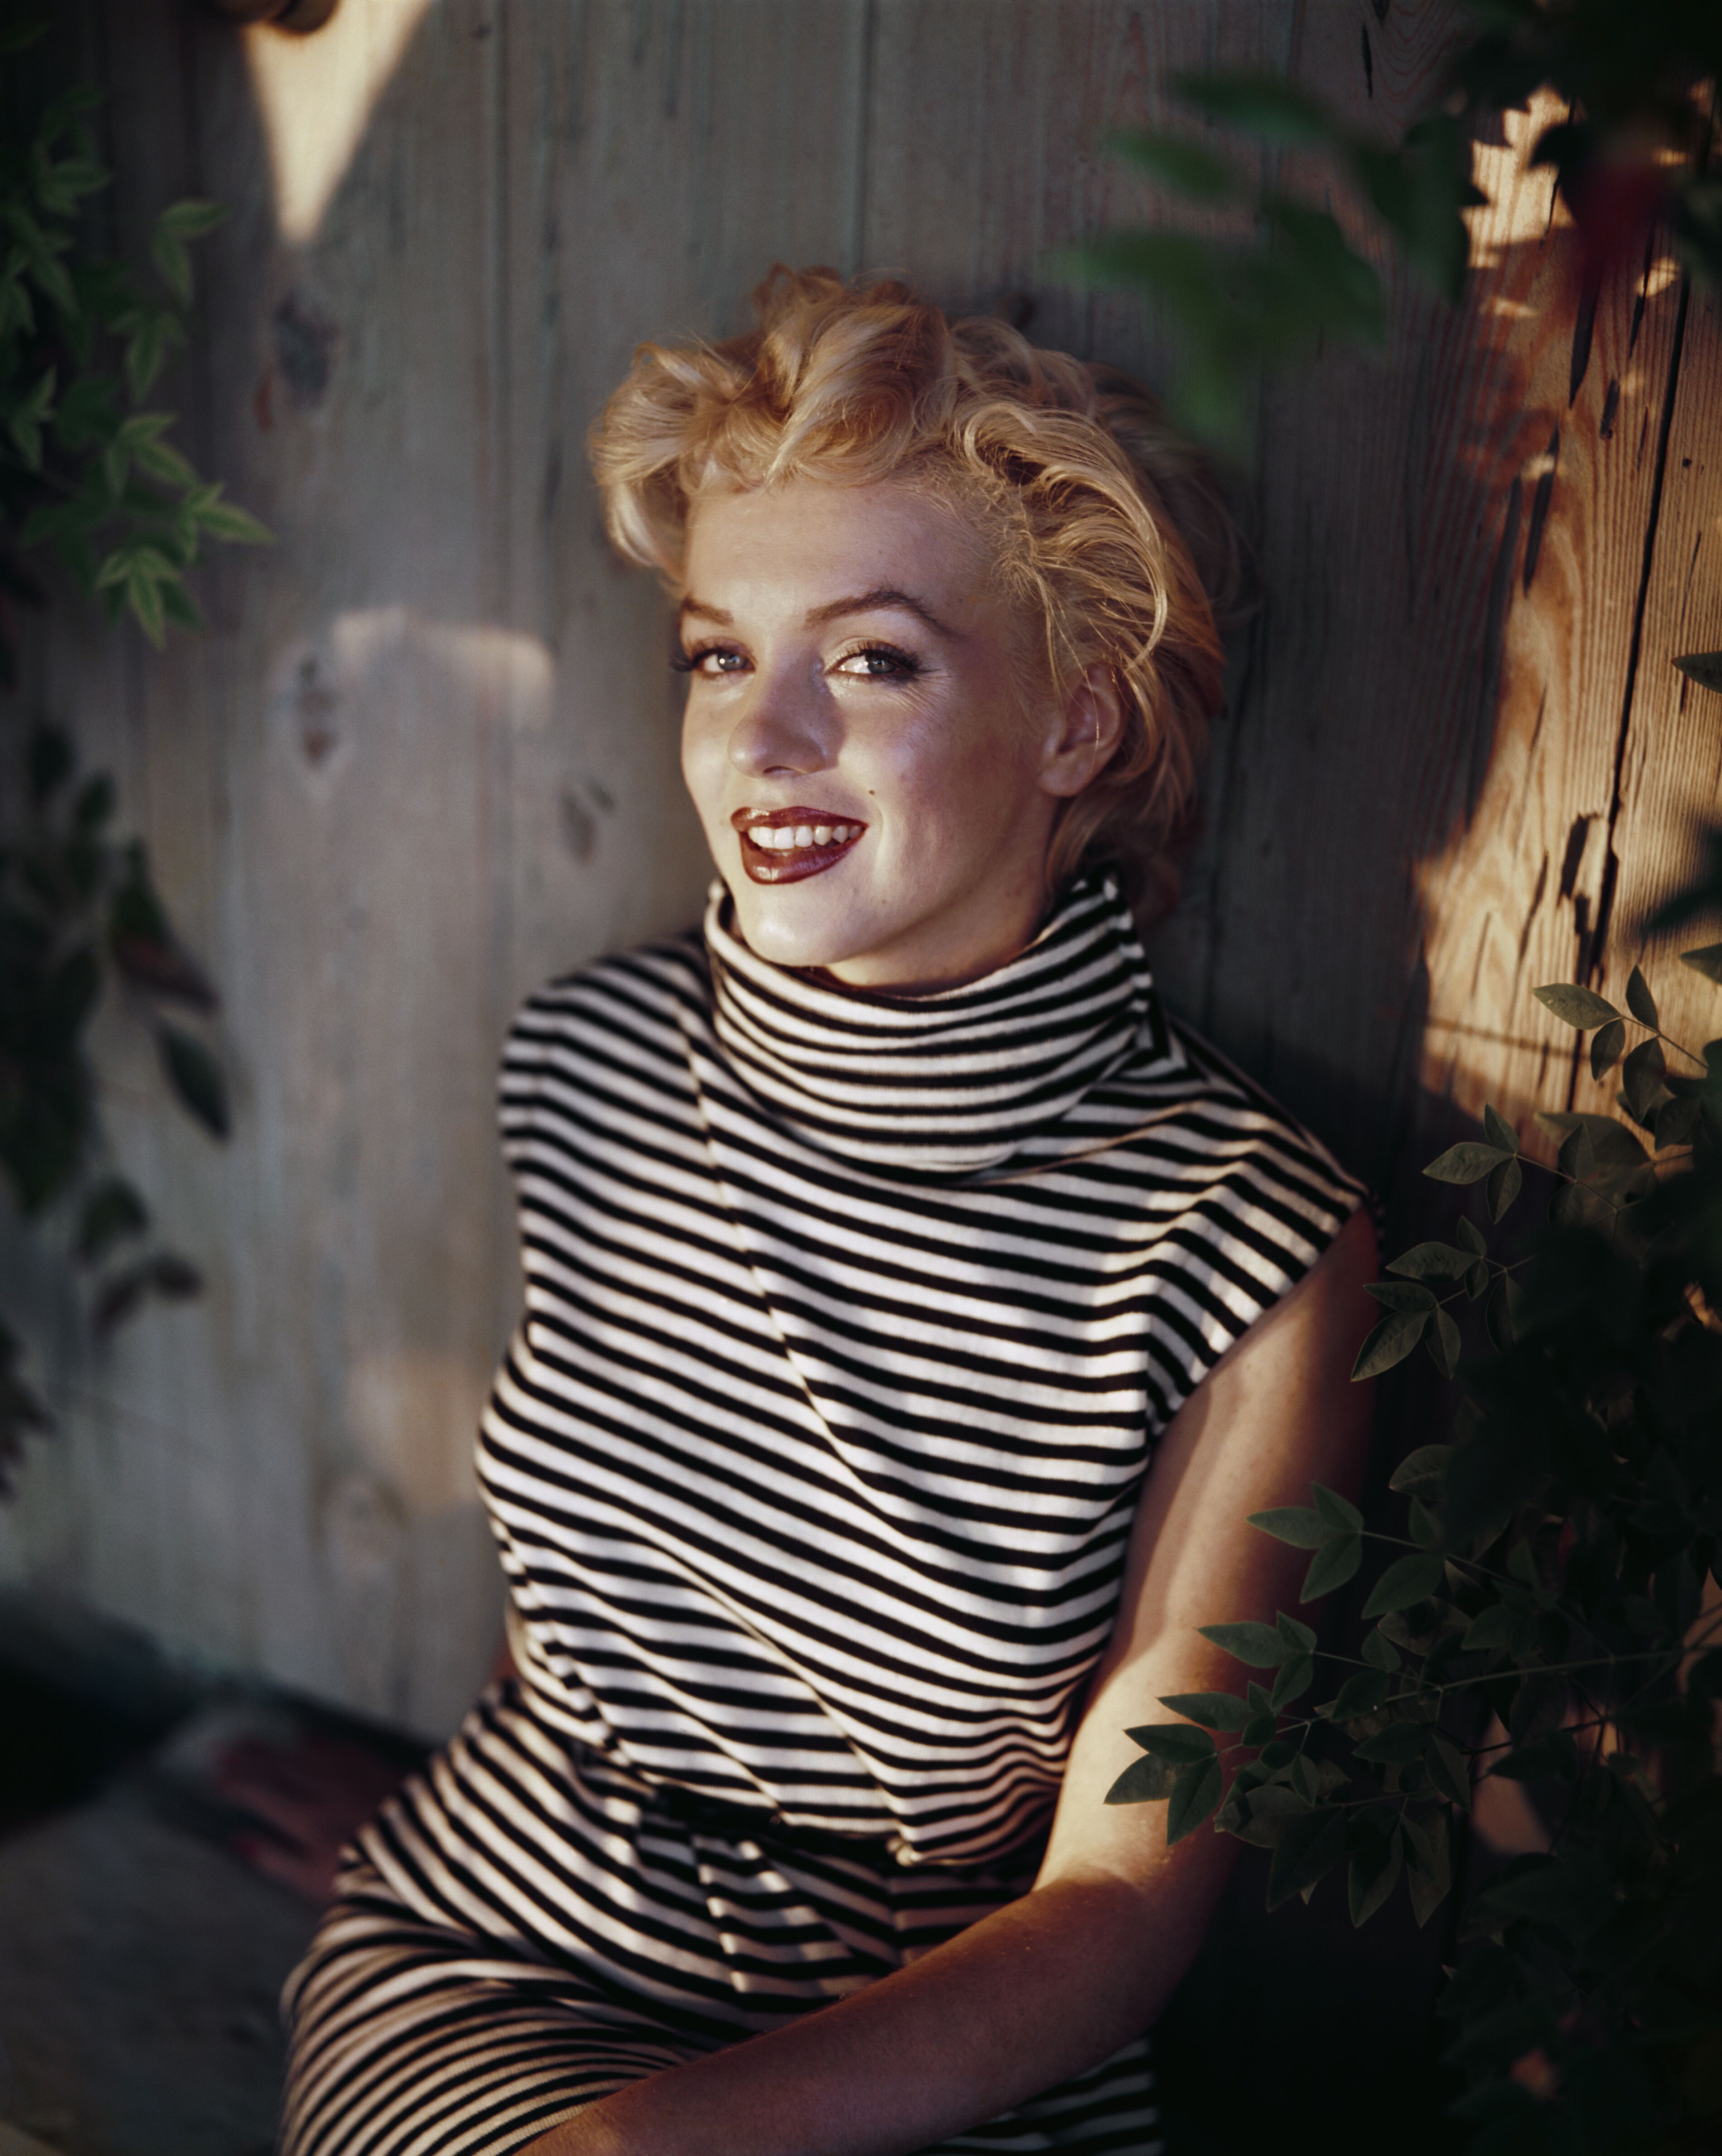 Marilyn Monroe (Norma Jean Mortenson or Norma Jean Baker, 1926 - 1962). | Source: Getty Images